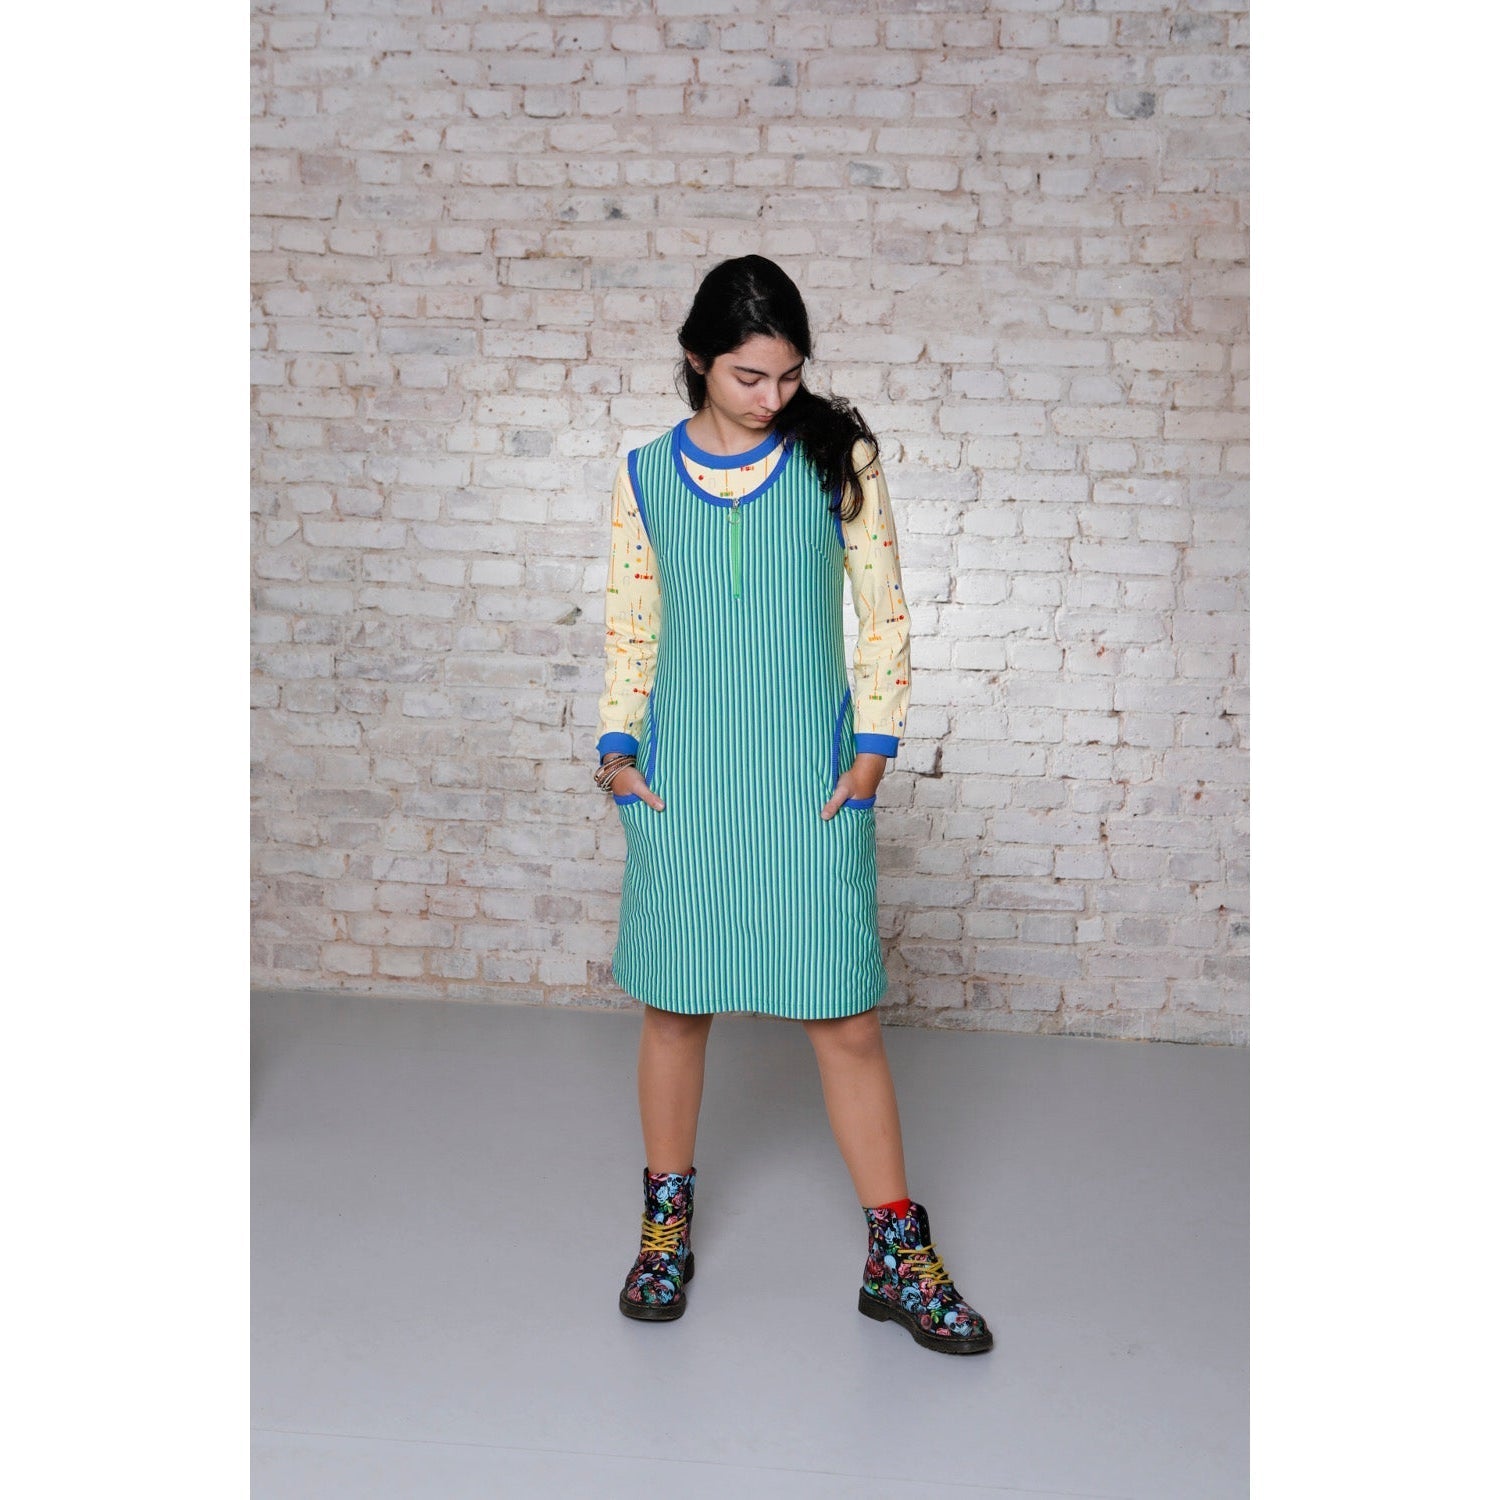 Adult's Blue Green Stripe Twiggy Dress - 1 Left Size L-Moromini-Modern Rascals